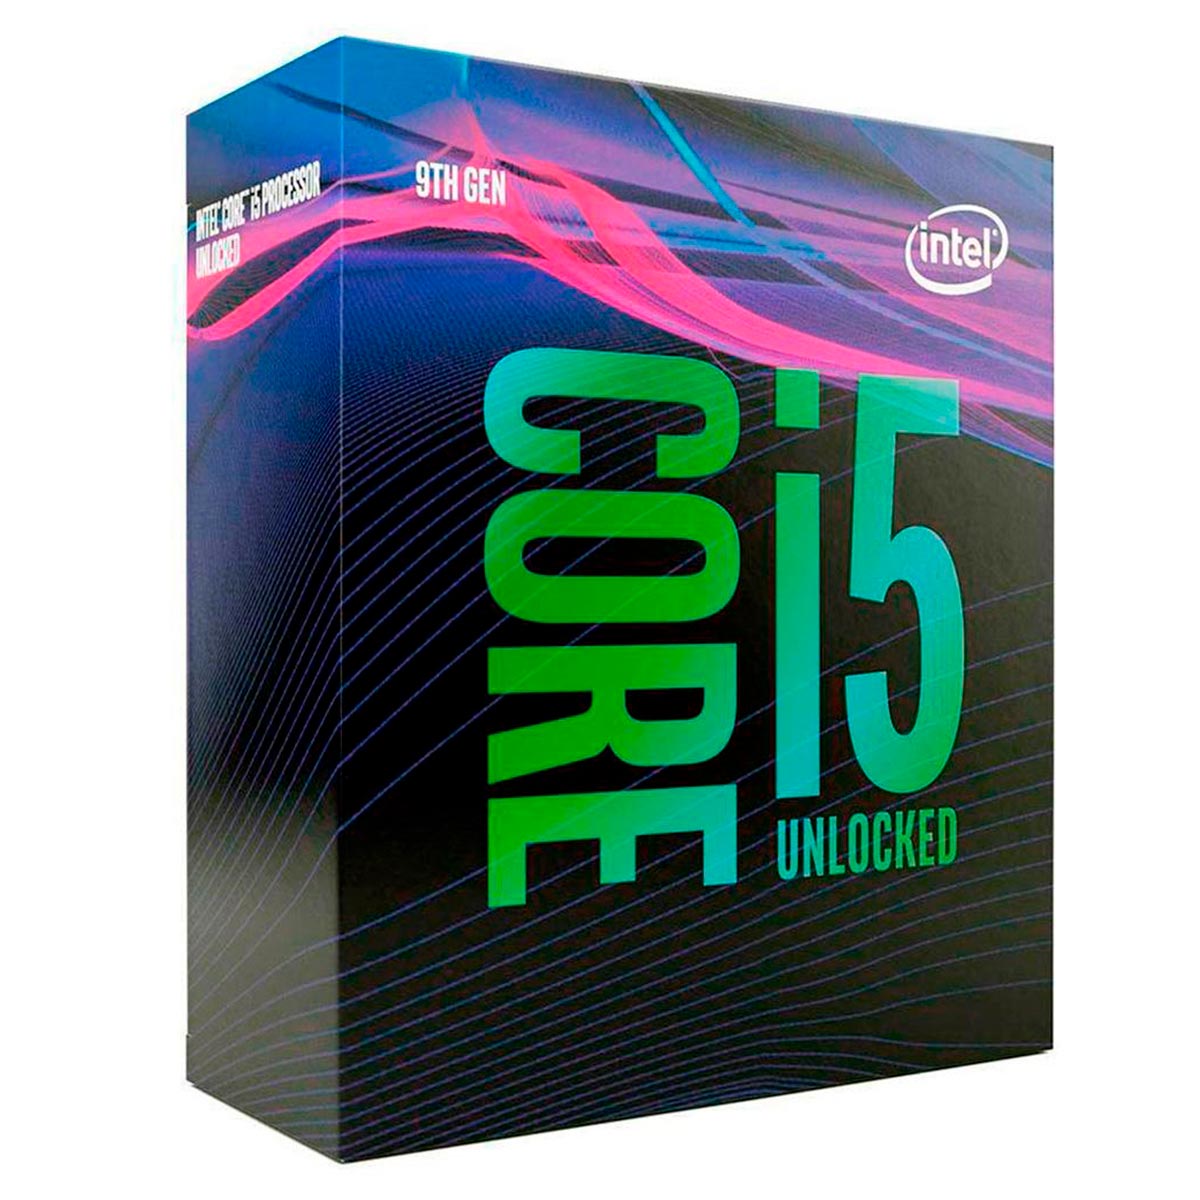 Intel® Core i5 9400F - LGA 1151 - Hexa Core - 2.9GHz (Turbo 4.1GHz) - Cache 9MB - 9ª Coffee Lake Refresh - BX80684I59400F [i]